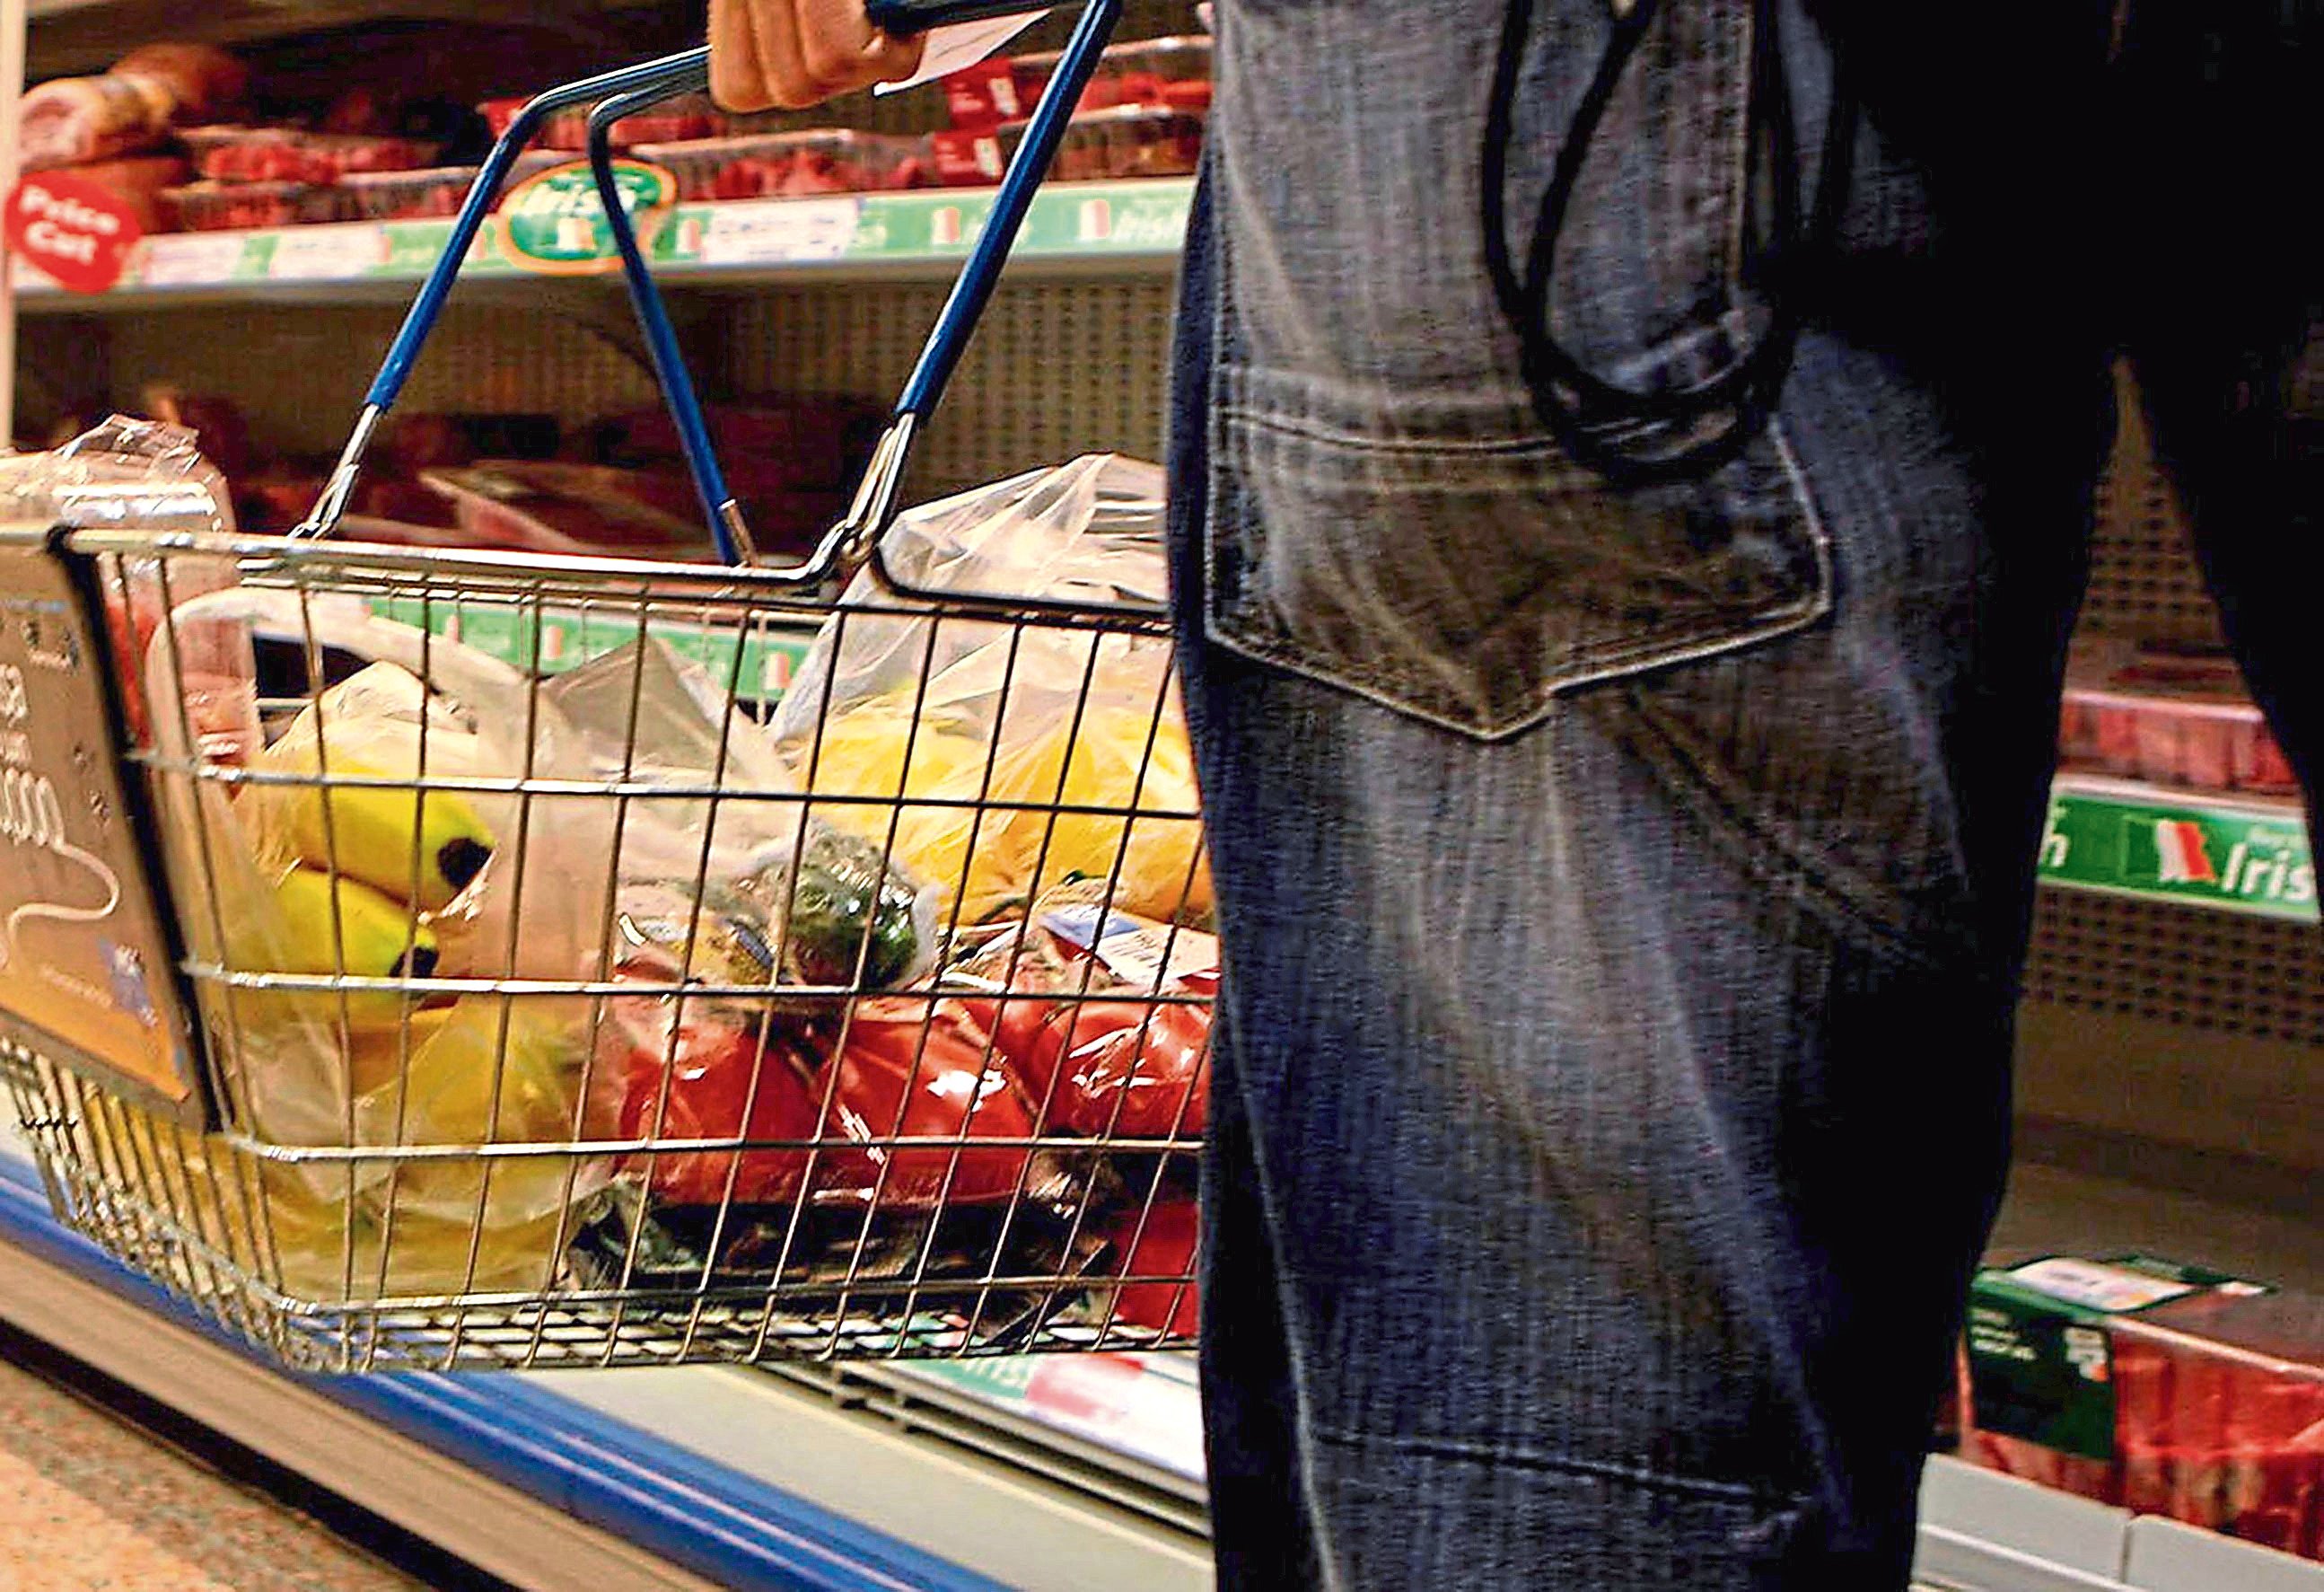 NFUS secret shoppers visited 58 supermarkets across Scotland.